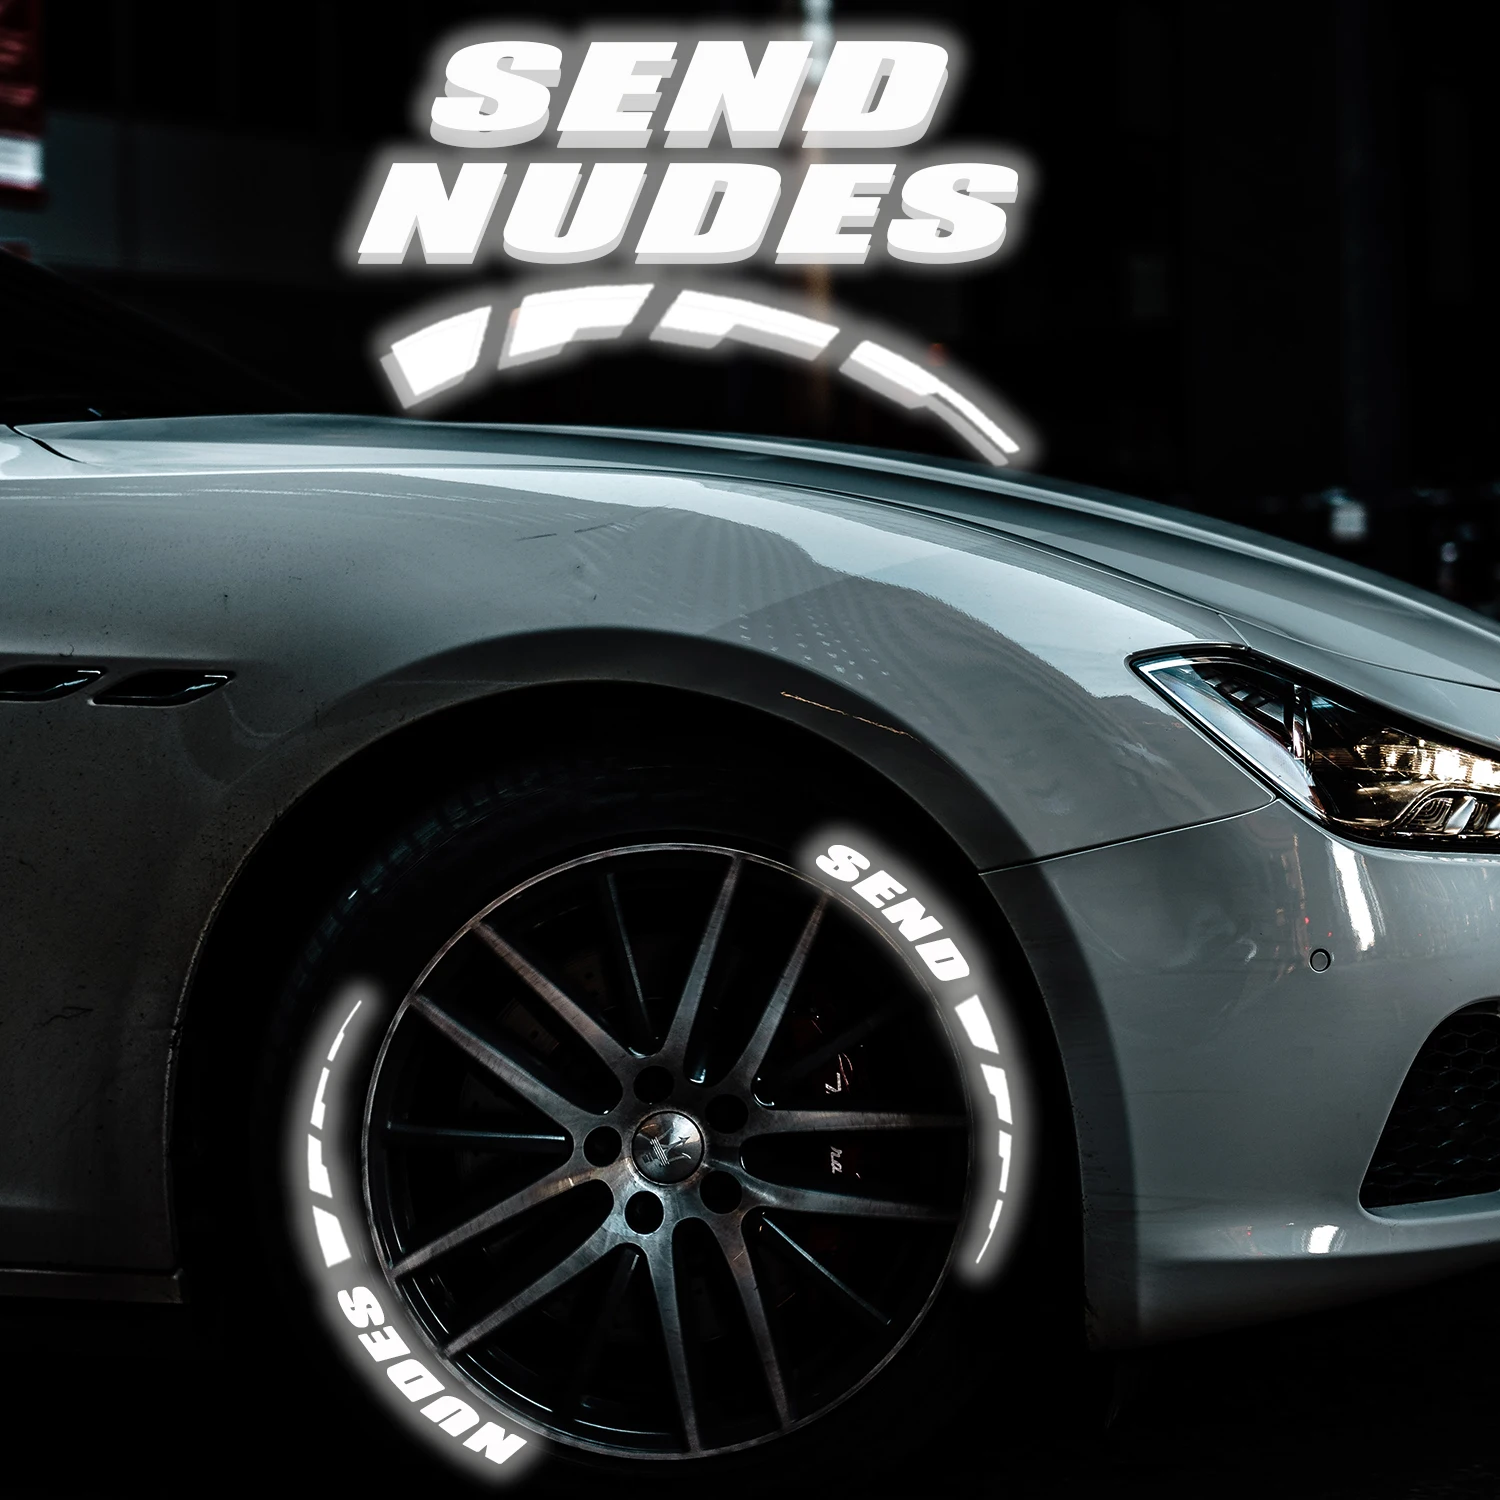 Send Nudes Tires